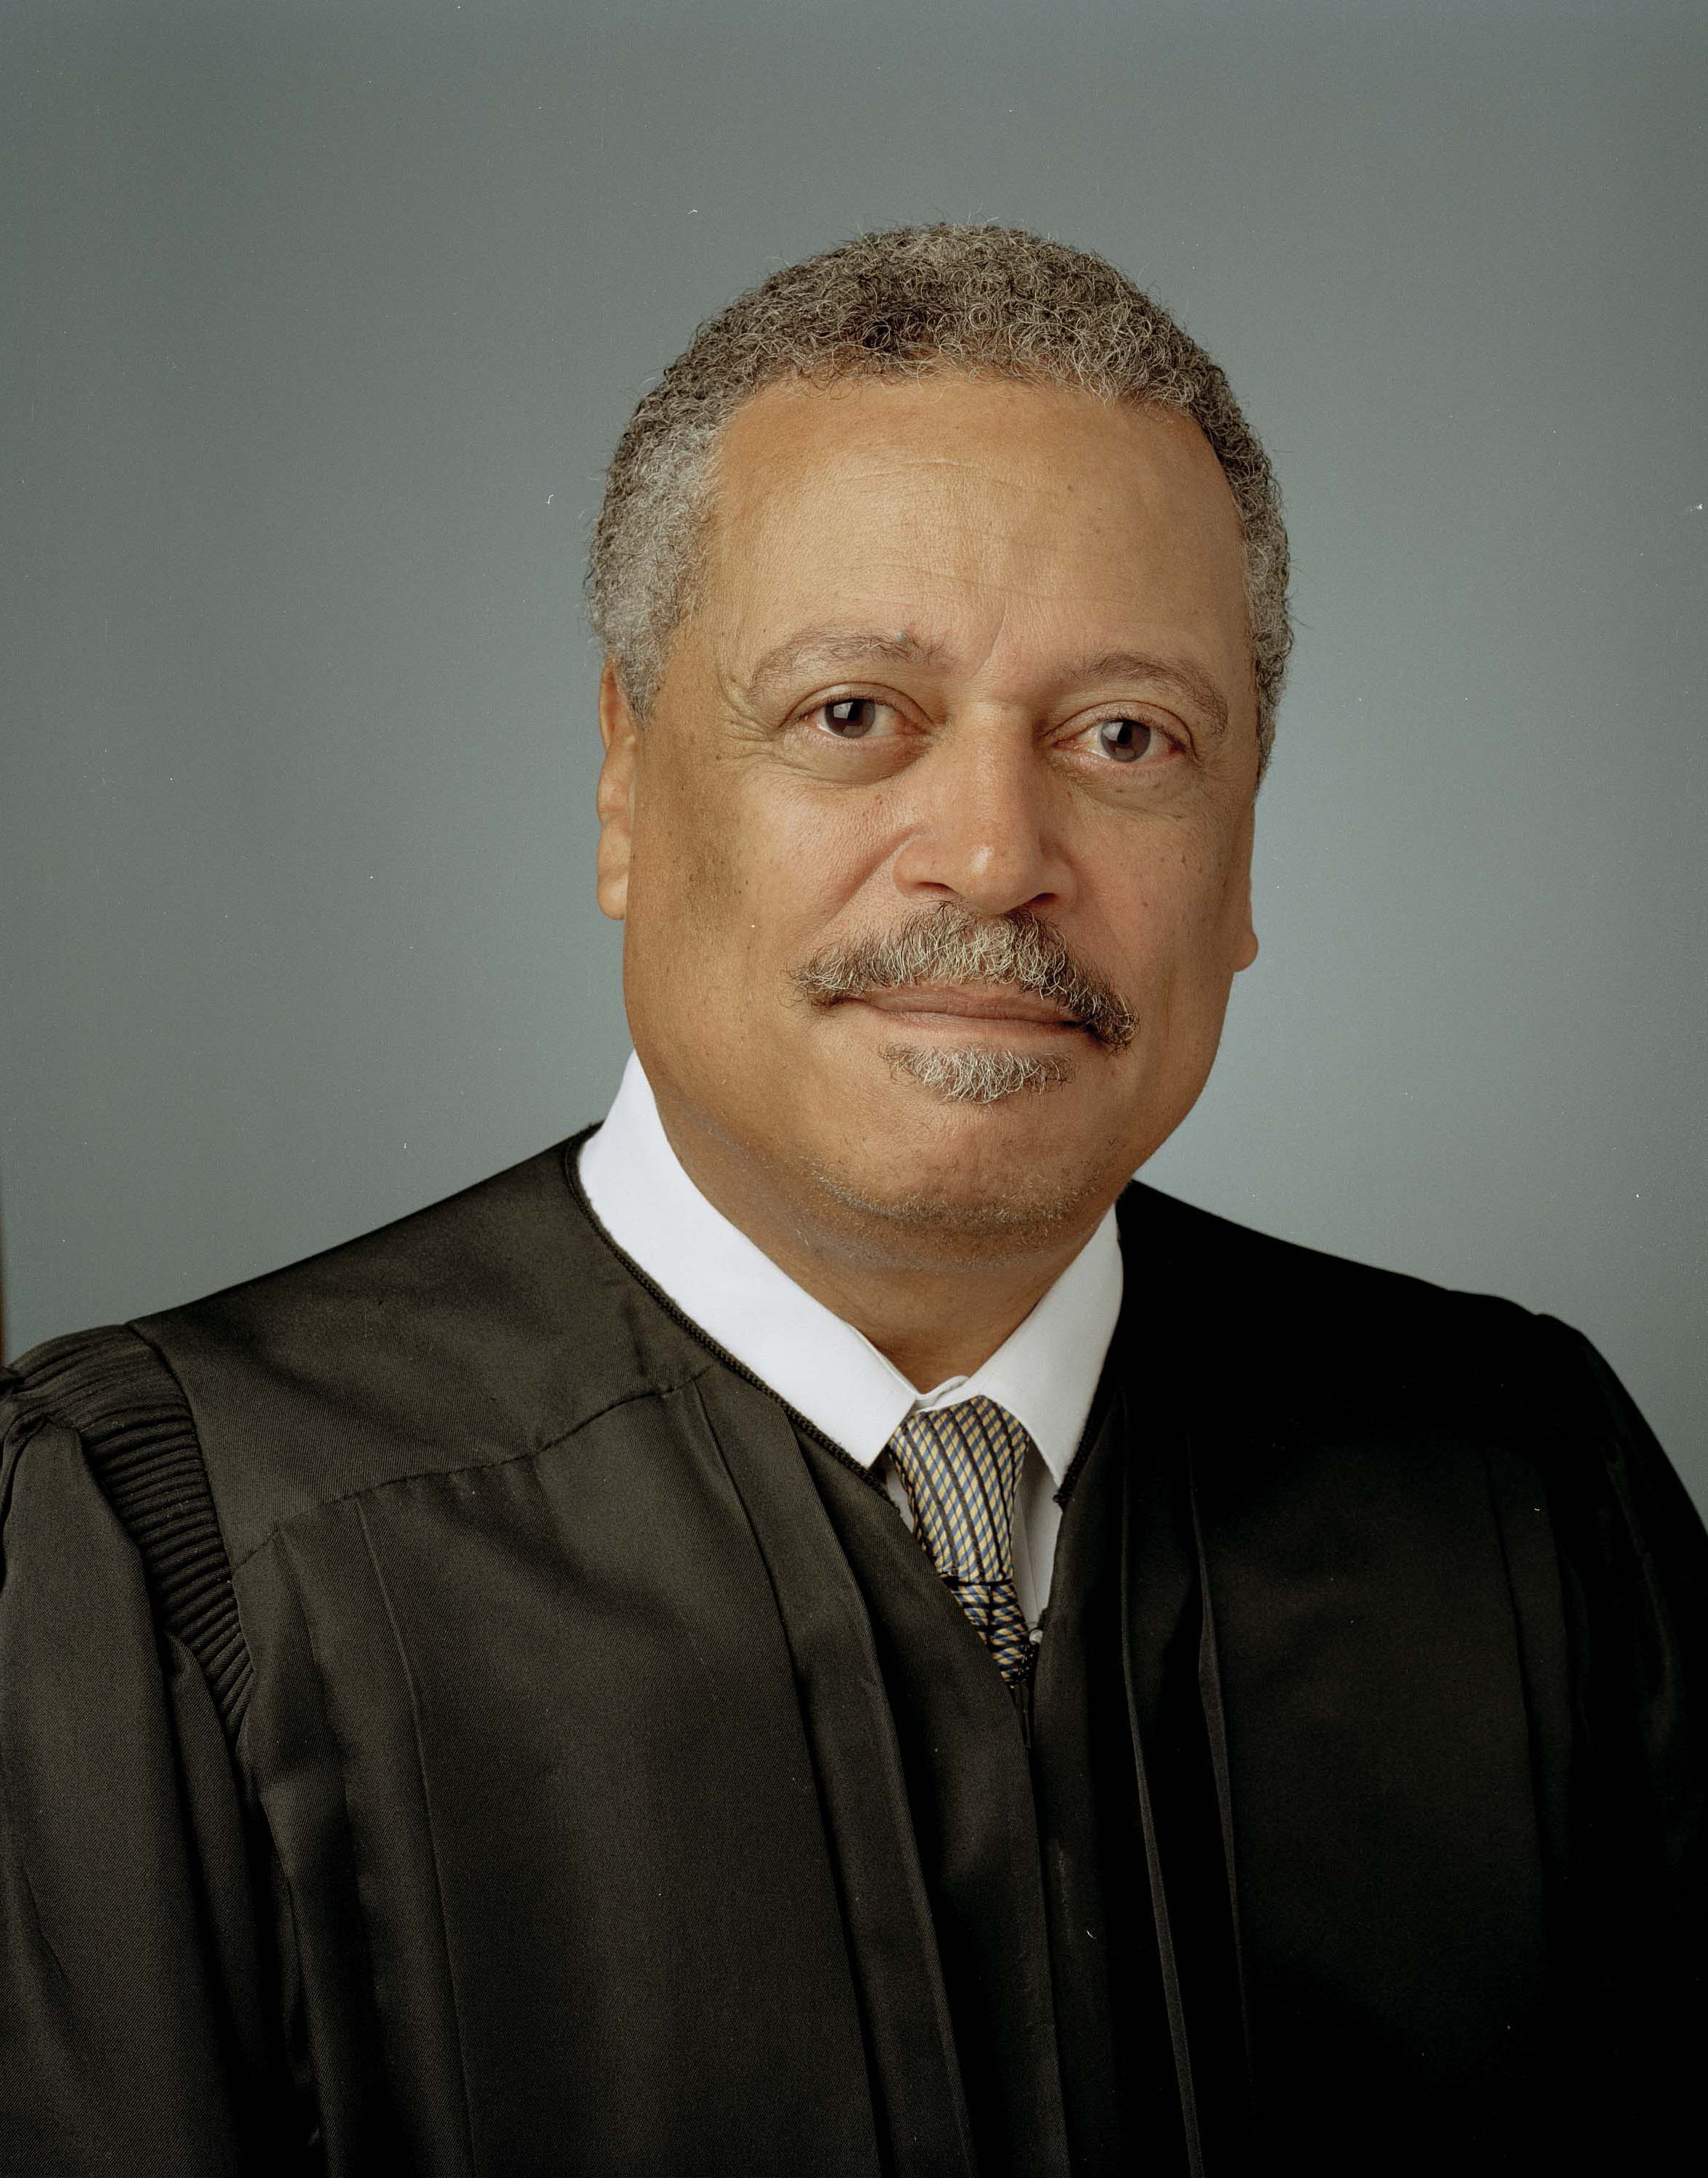 Judge Emmet Sullivan